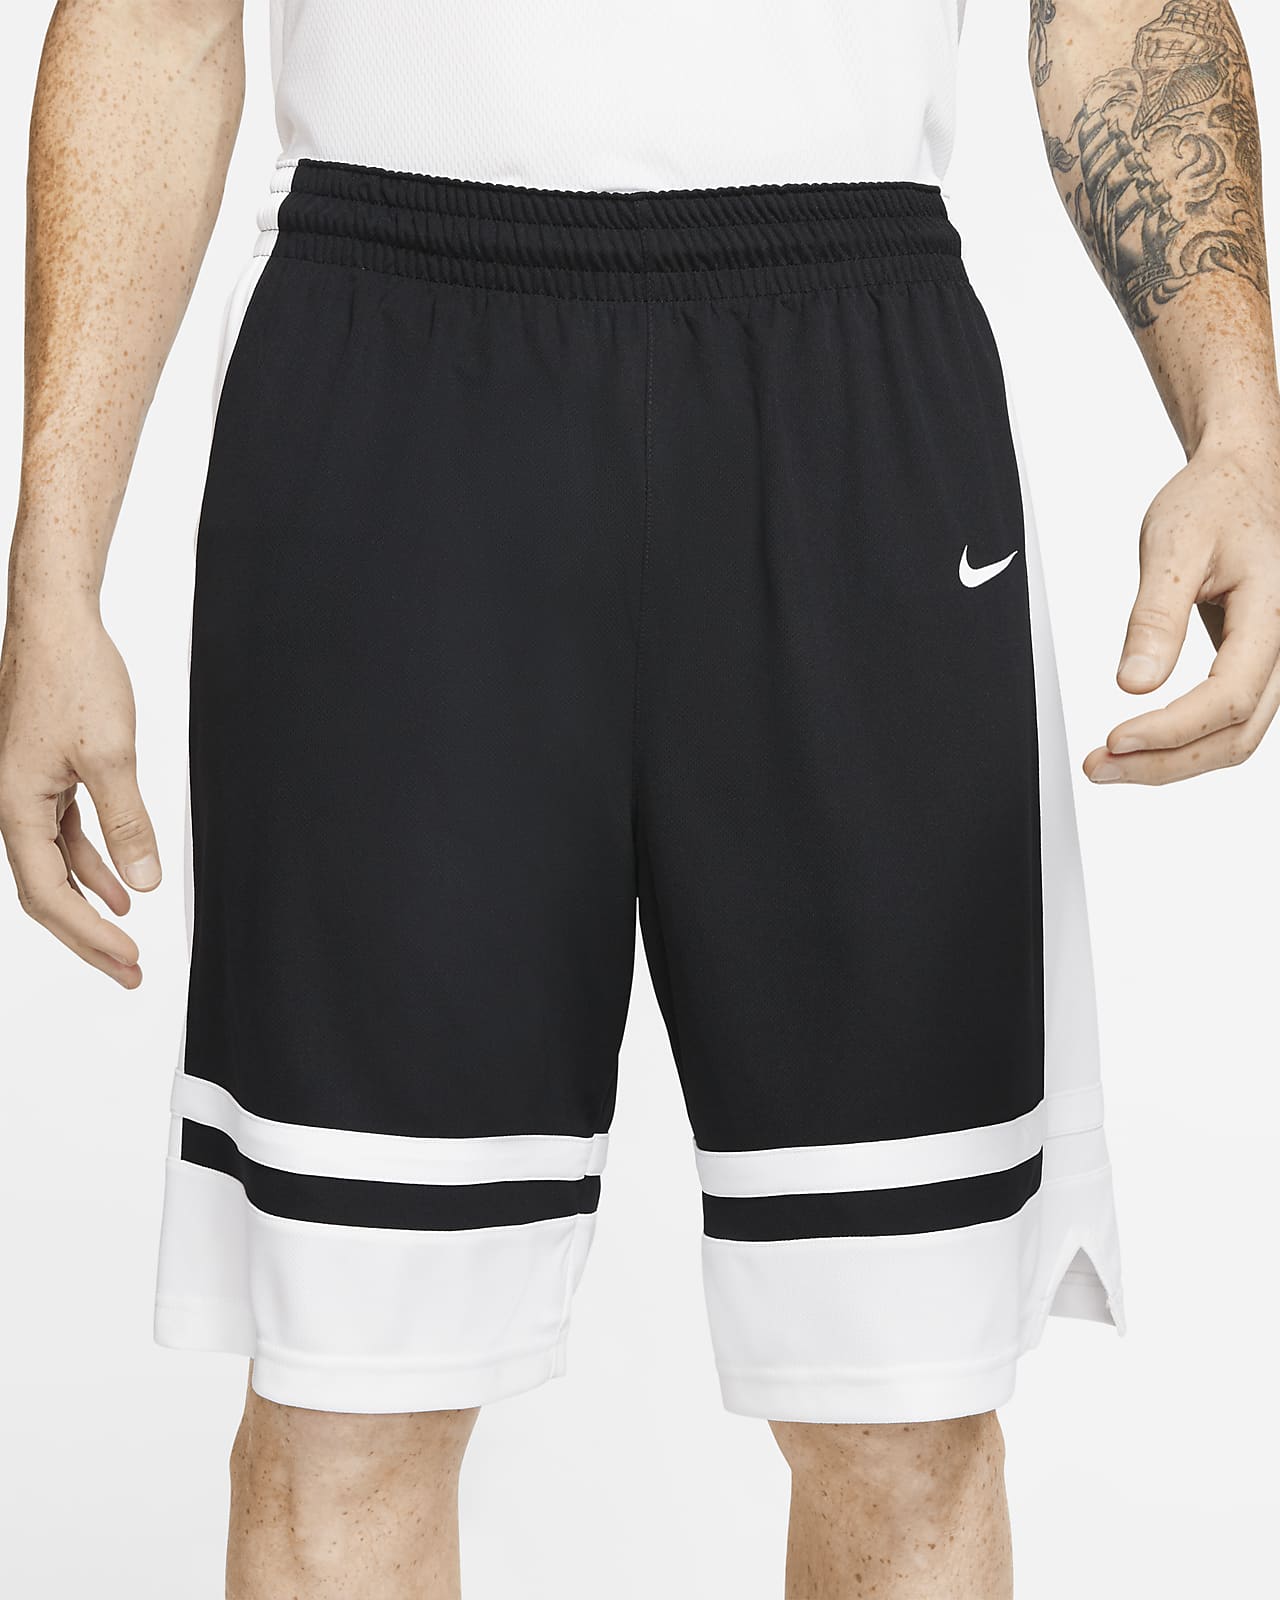 Buy > nike elite girls basketball shorts > in stock